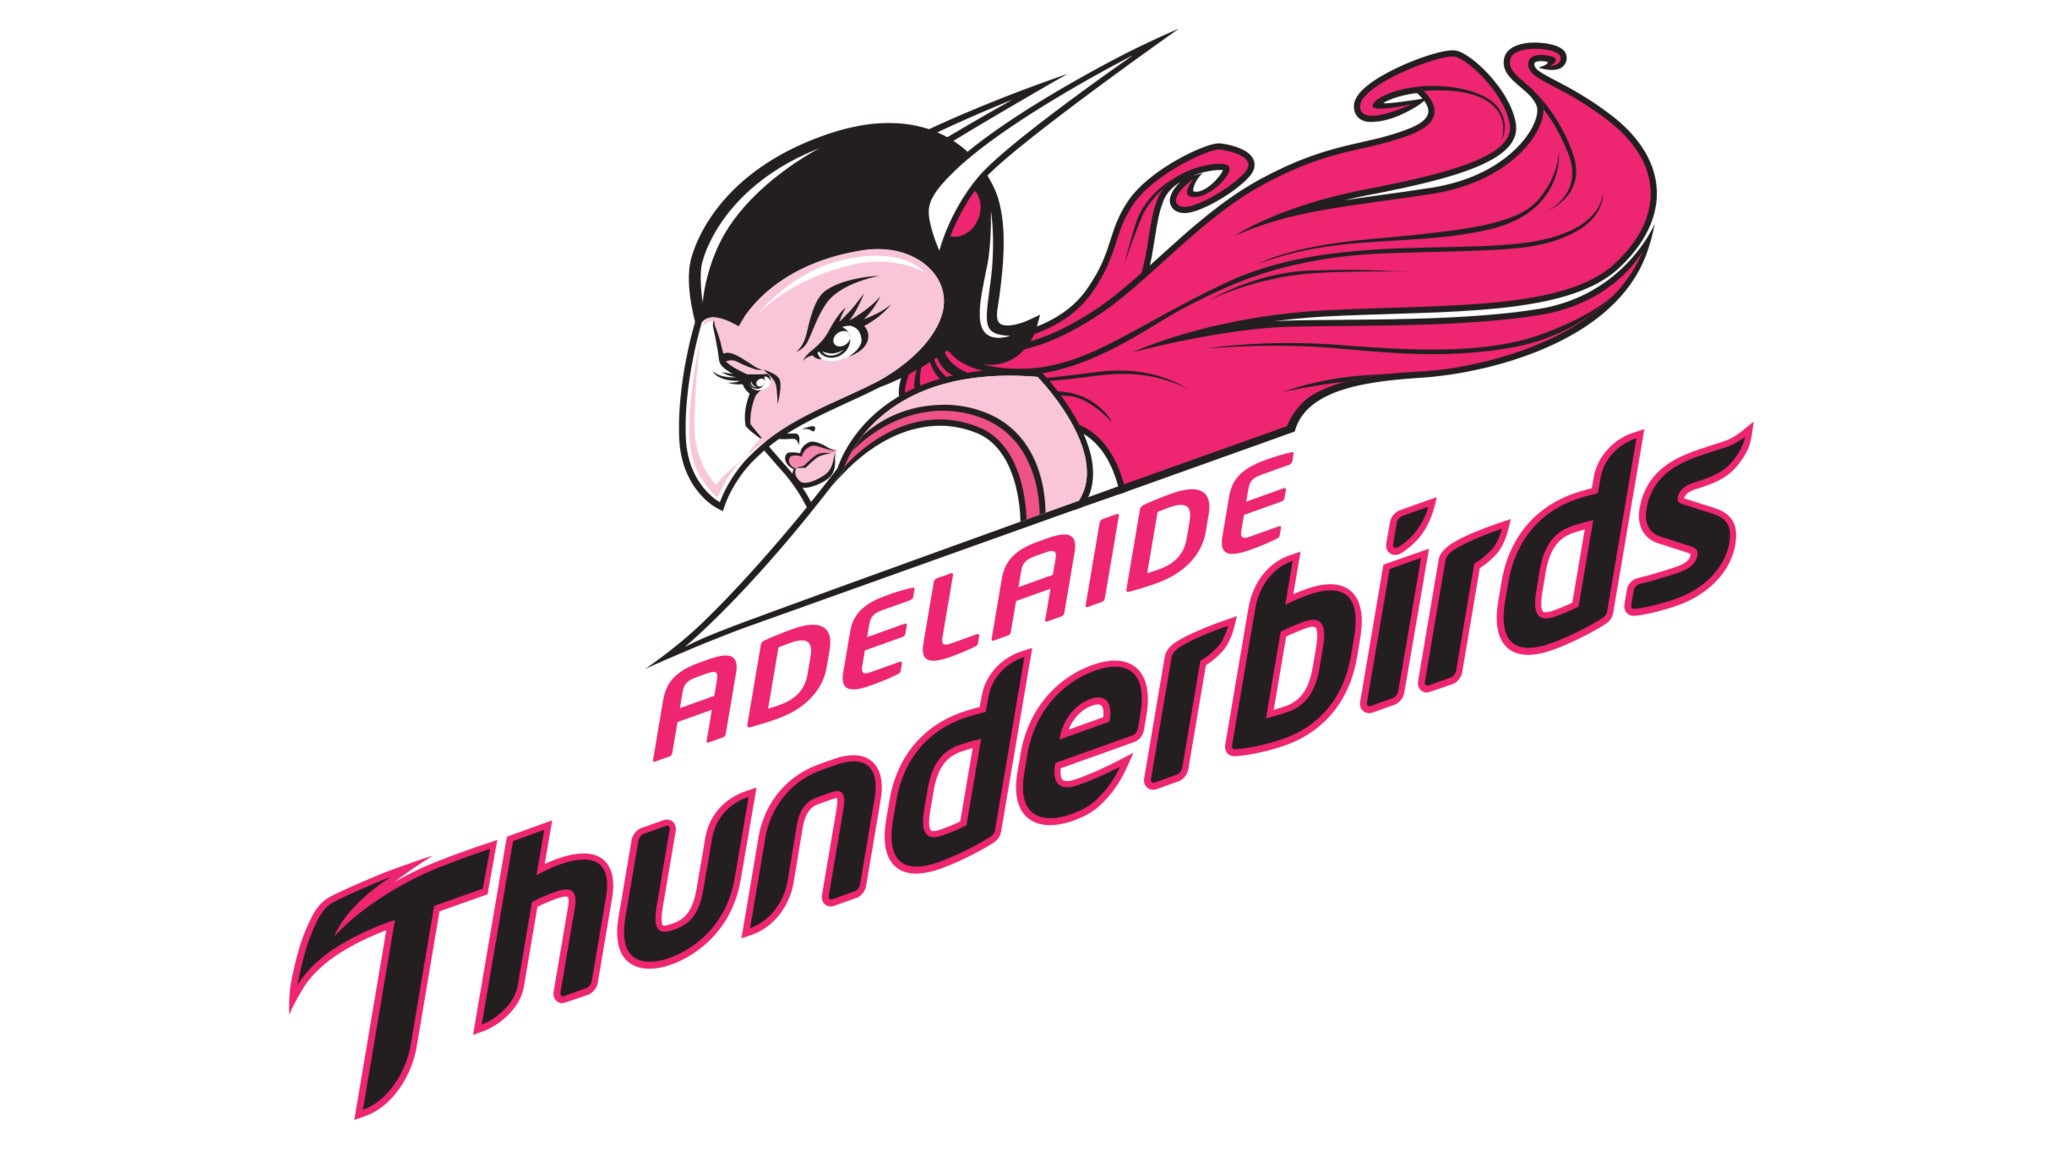 Adelaide Thunderbirds presale information on freepresalepasswords.com